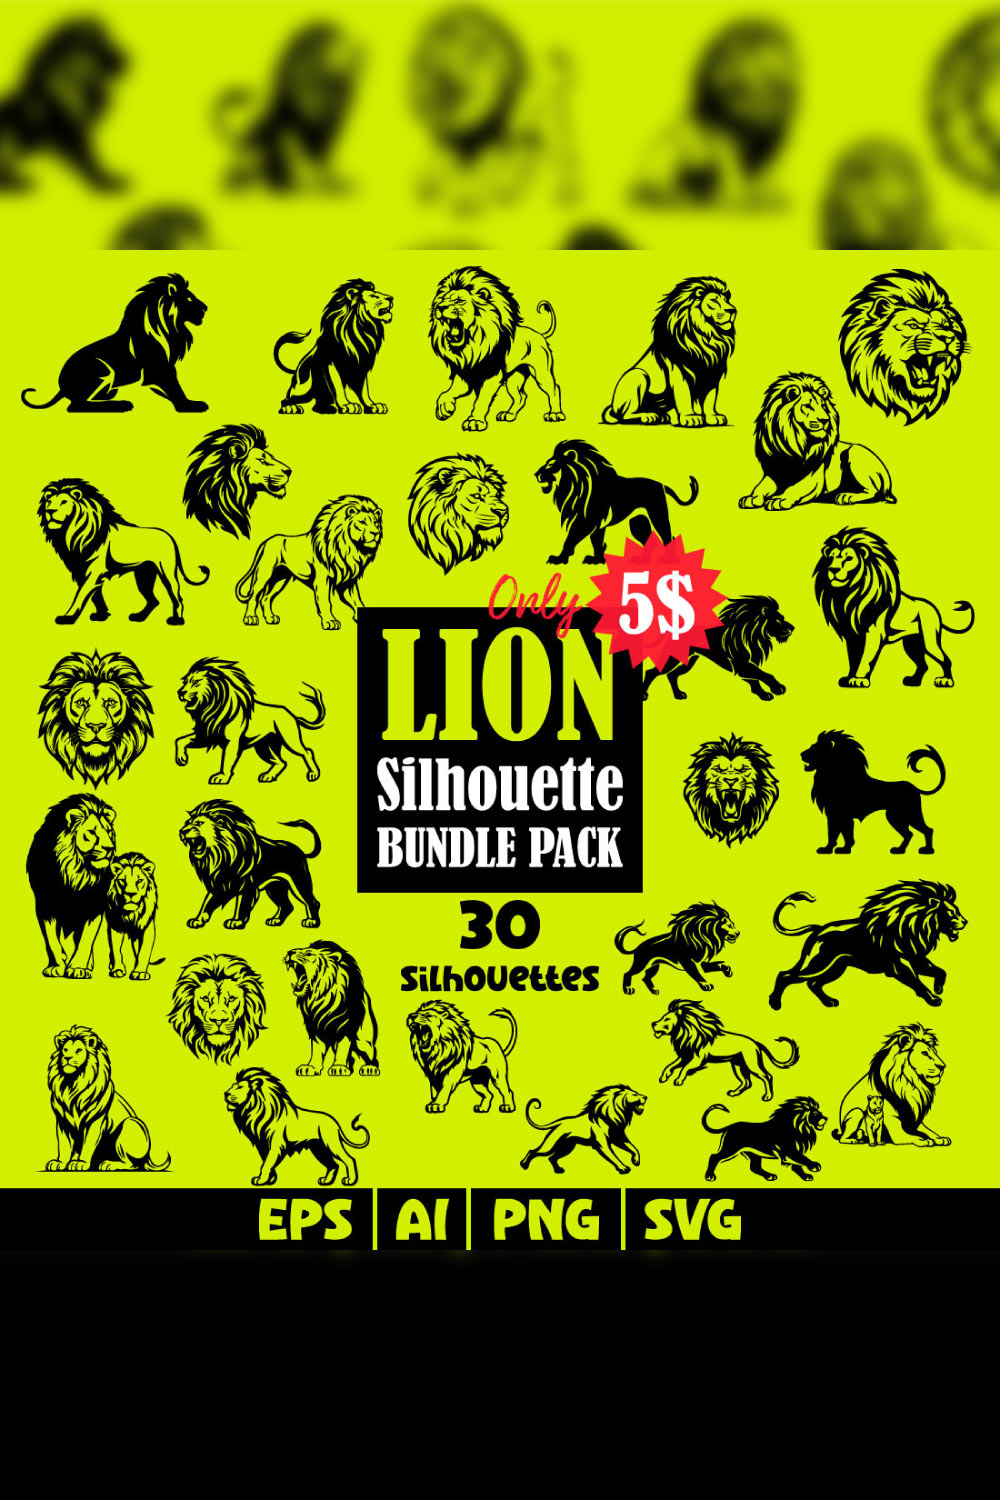 Majestic Lion Silhouette Bundle Pack | 30 Lion Silhouettes pinterest preview image.